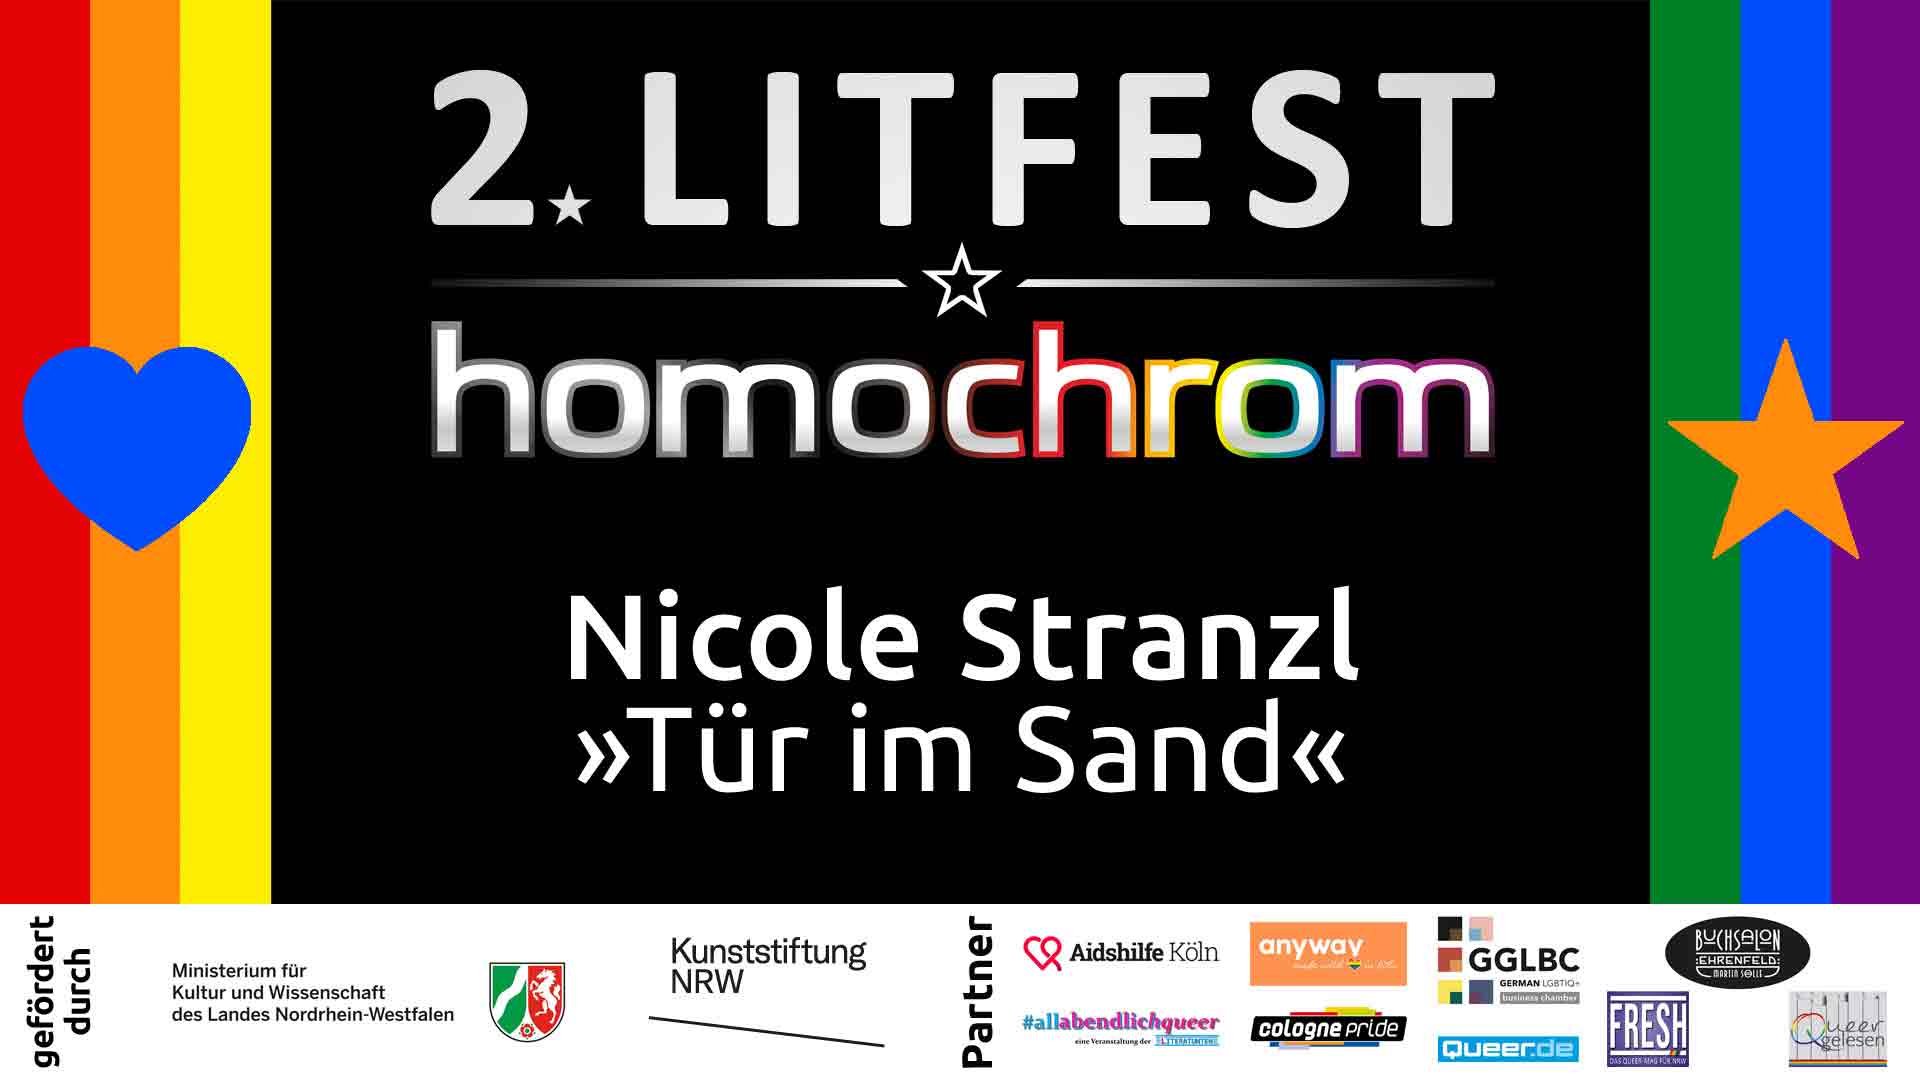 Youtube Video, Nicole Stranzl, 2. Litfest homochrom